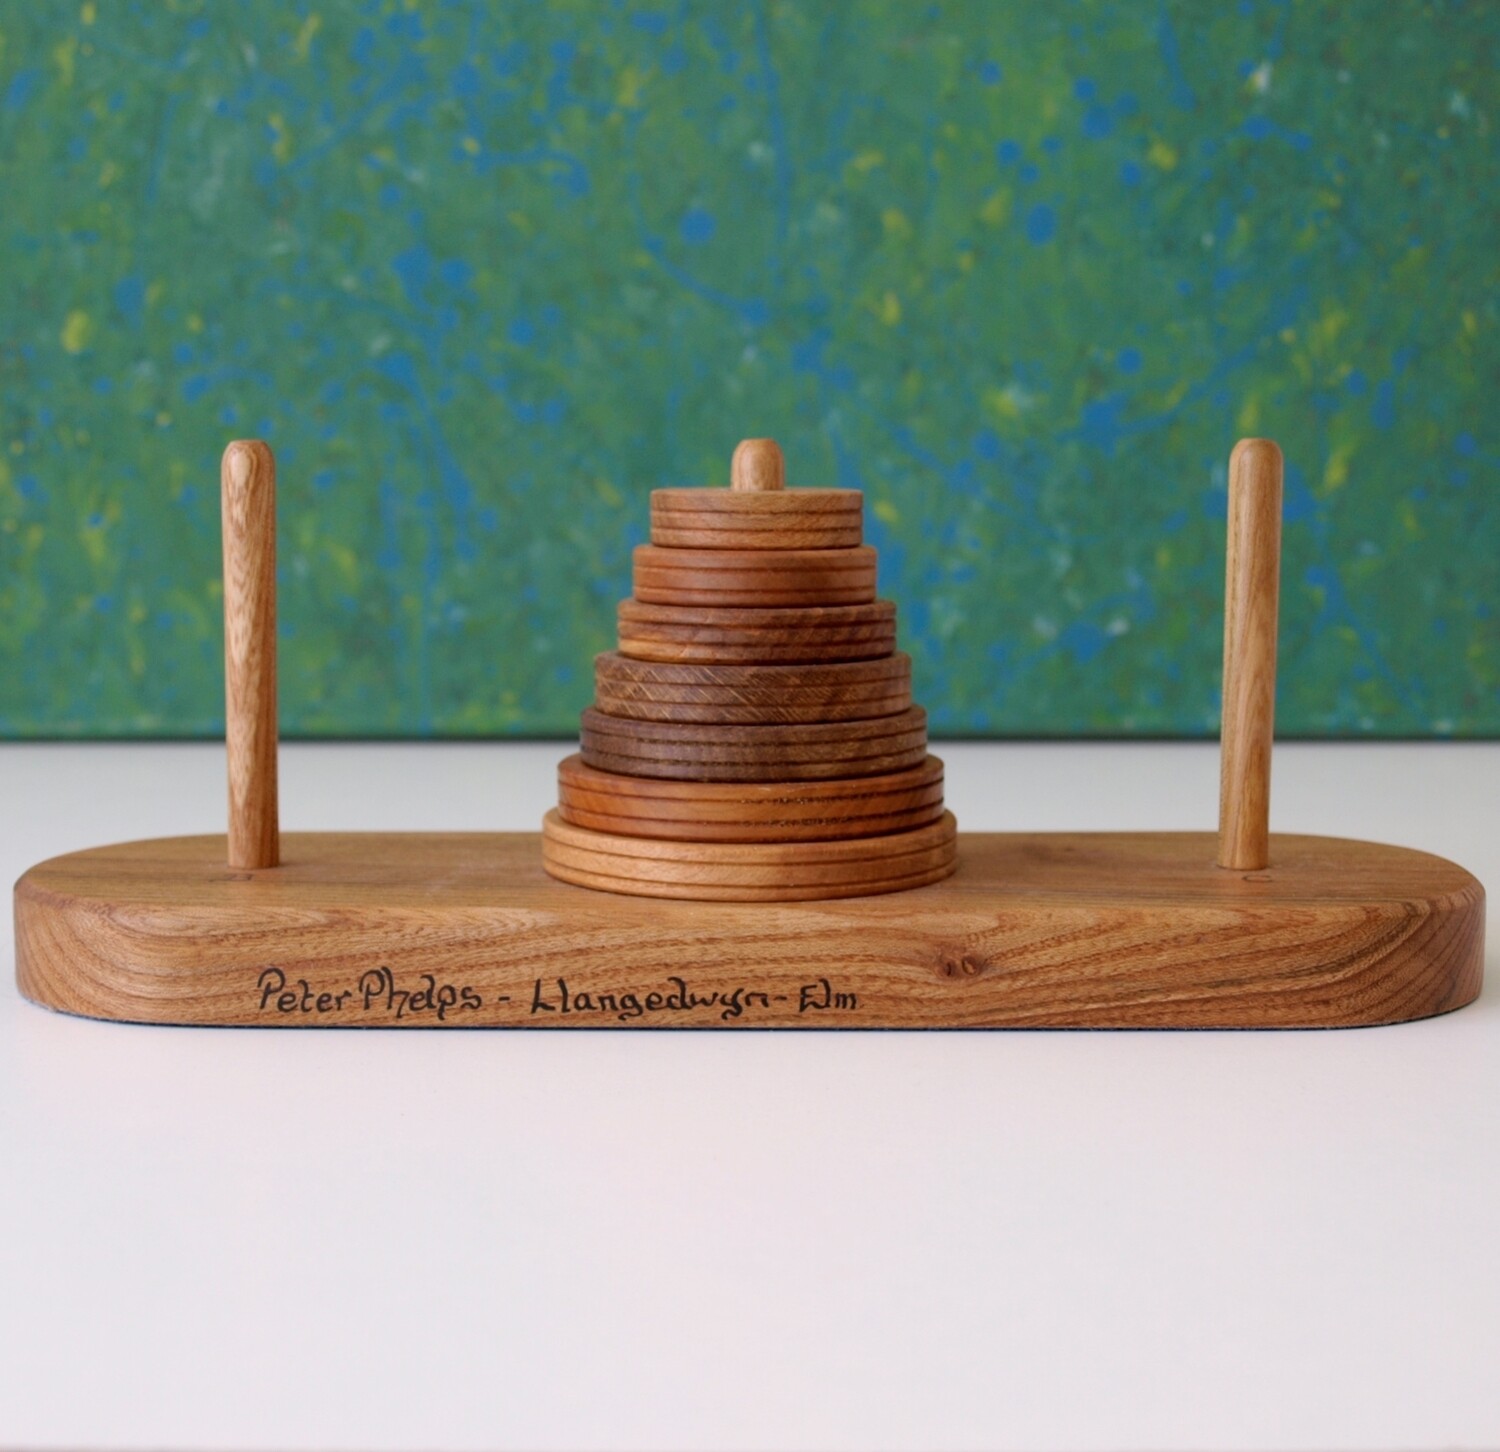 Carpenter's Wood Sampler by Peter Phelps of Llangedwyn - Oak, Yew, Elm, etc